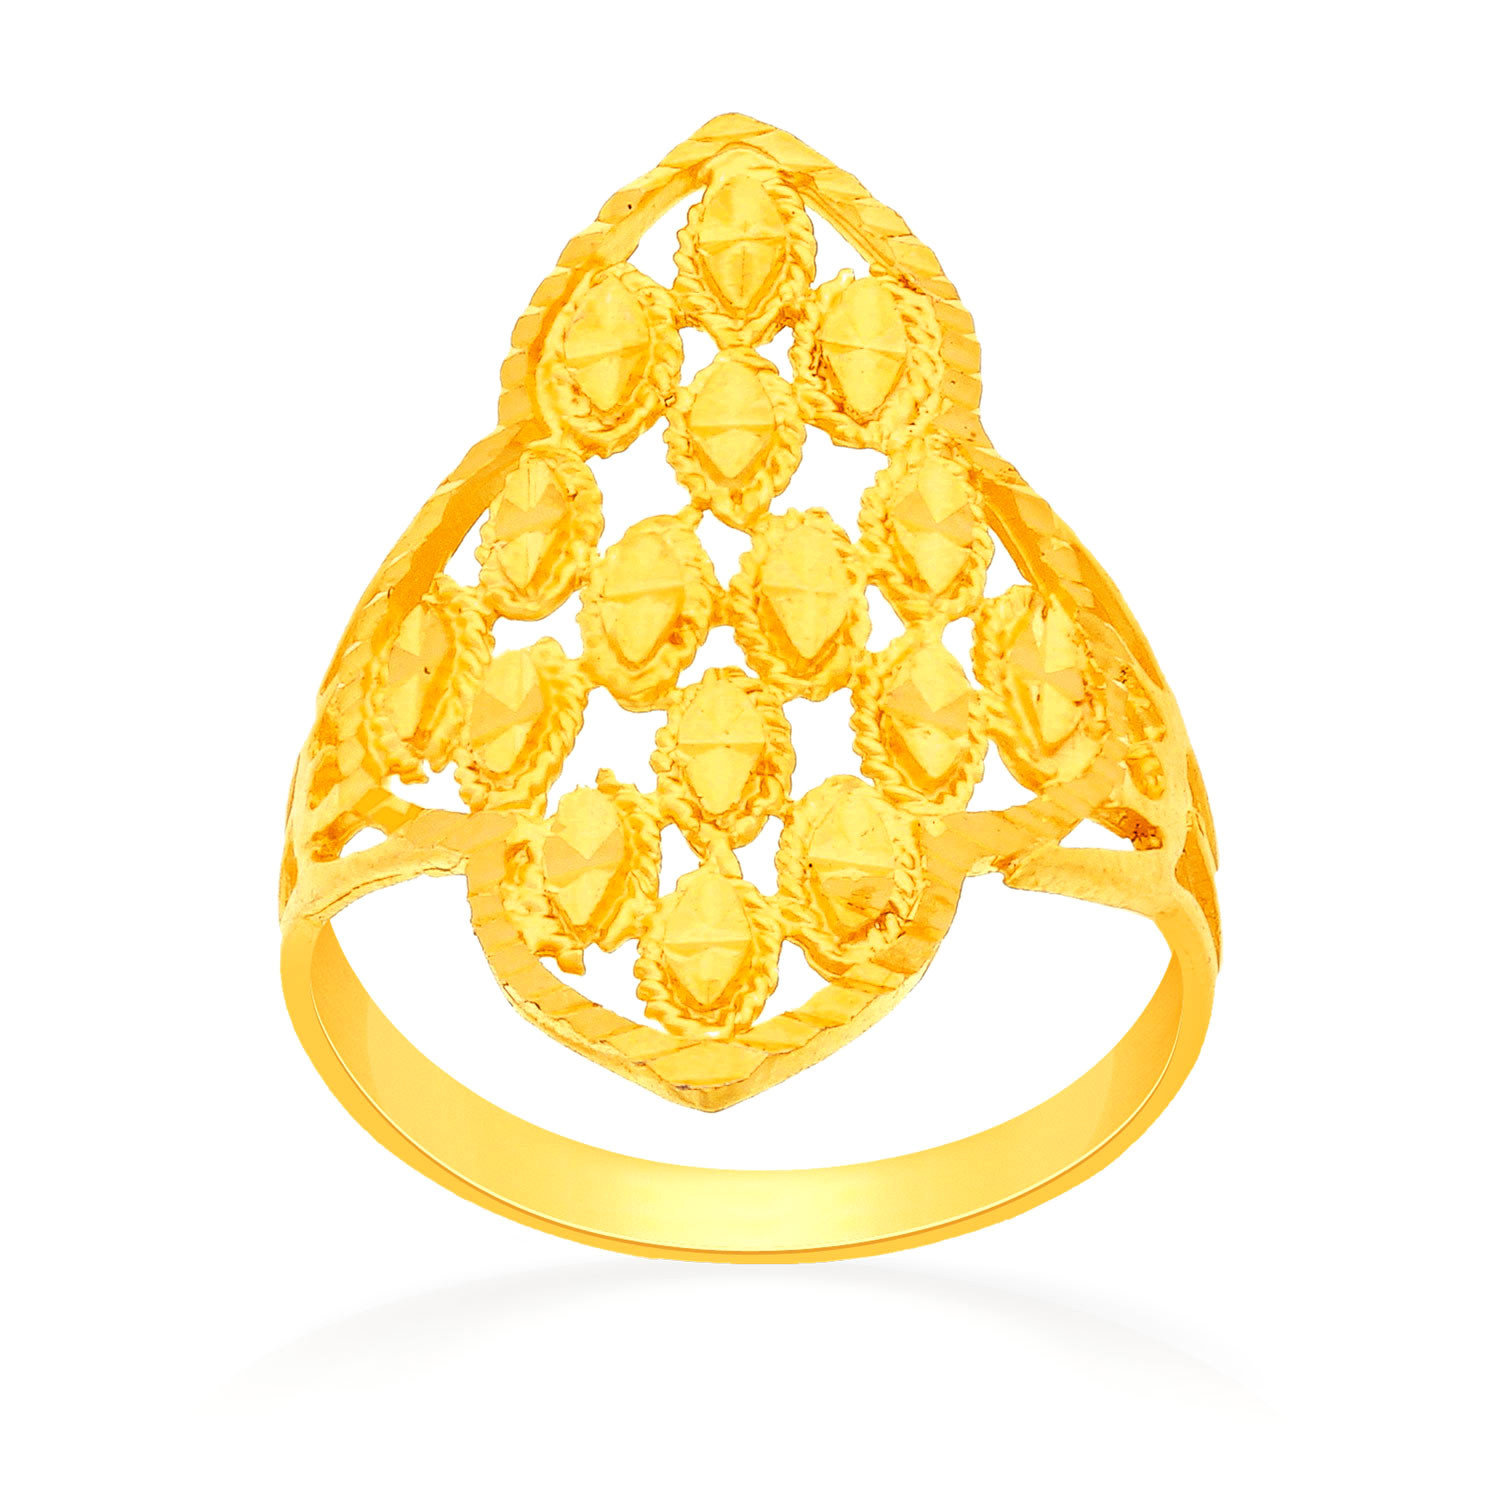 Buy quality Real diamond fancy ladies ring in Ahmedabad